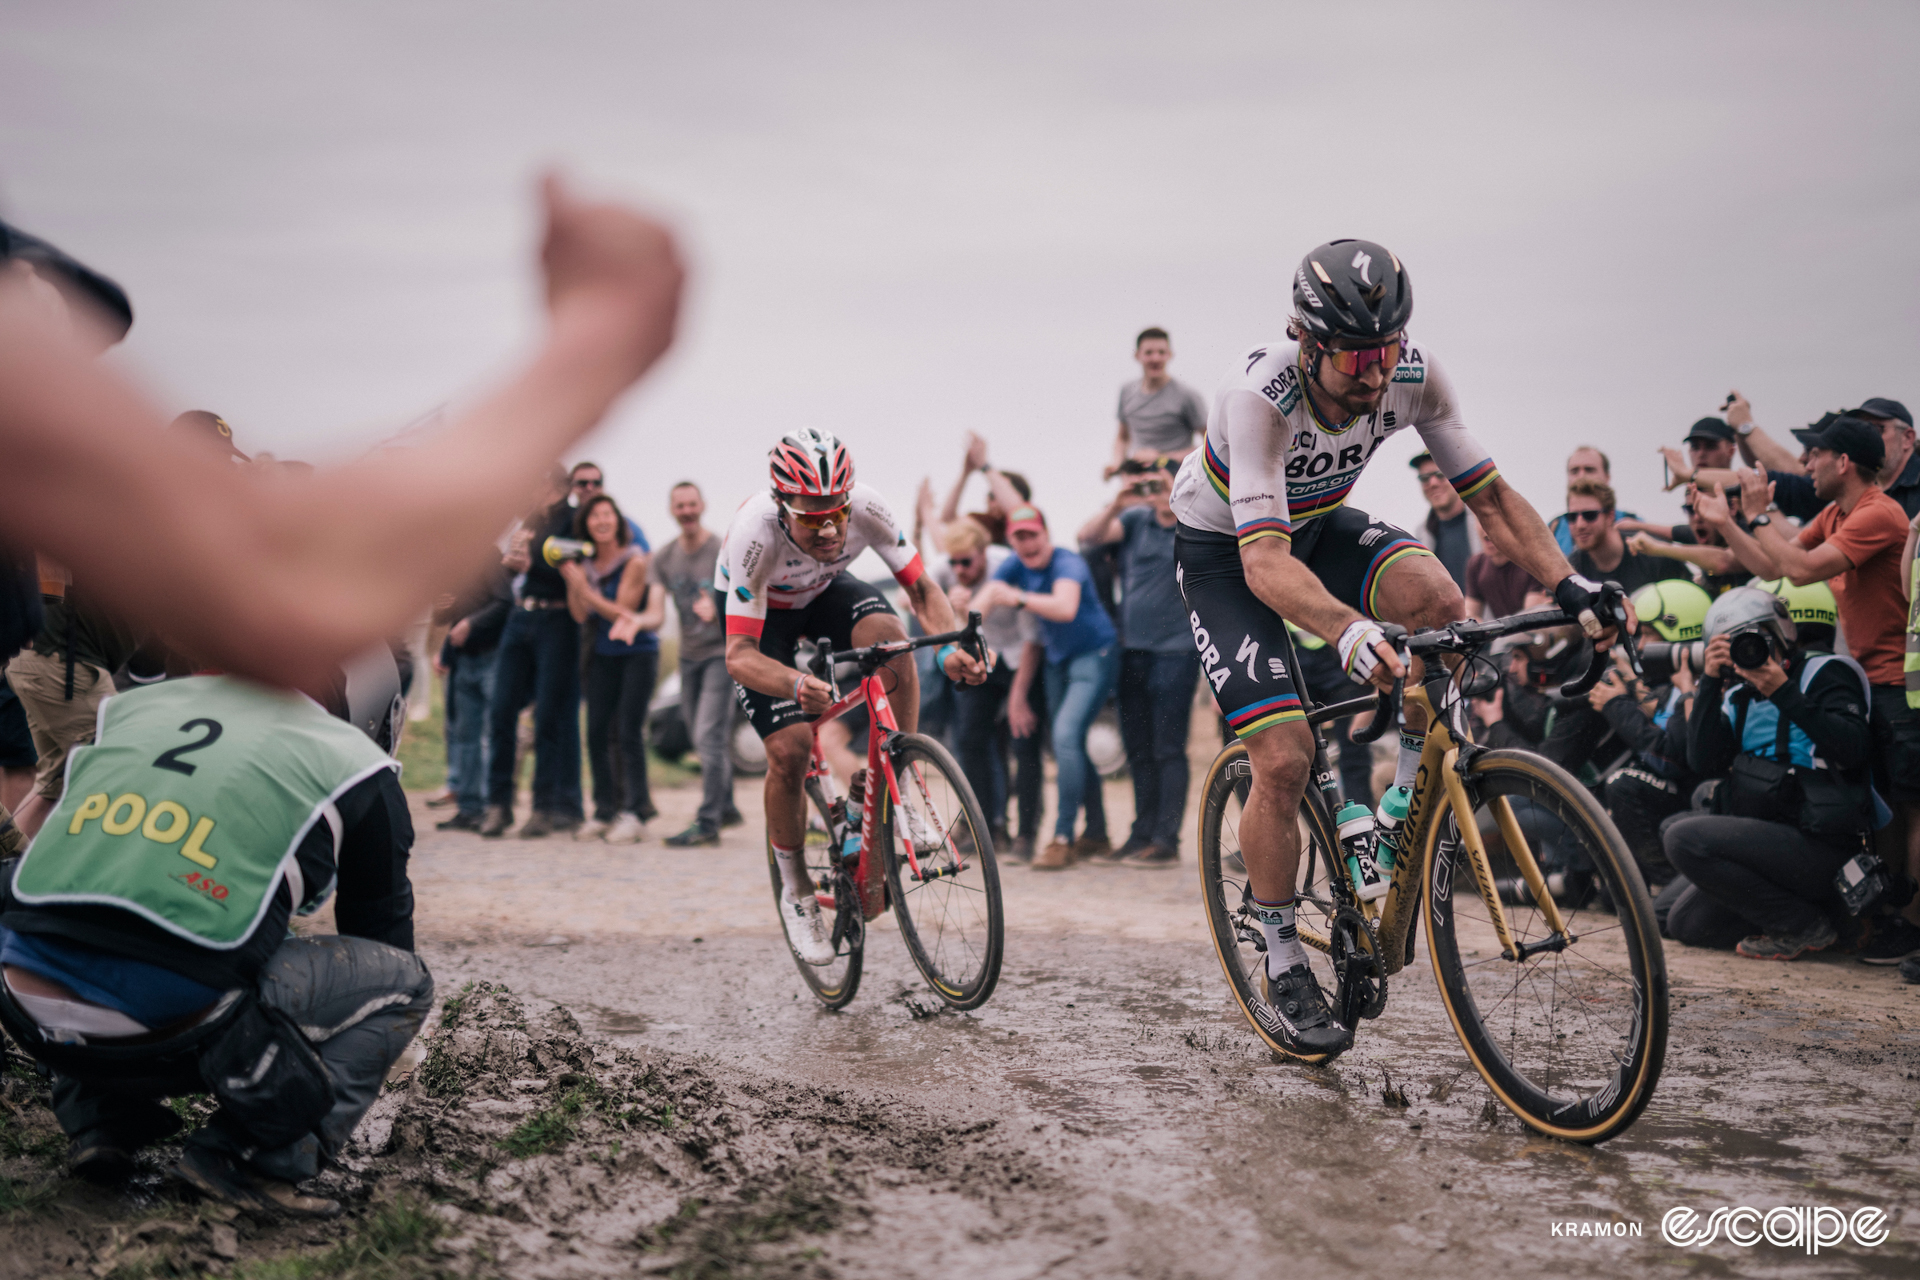 Peter Sagan leads Silvan Dillier on a muddy, cobblestone road at the 2018 Paris-Roubaix.